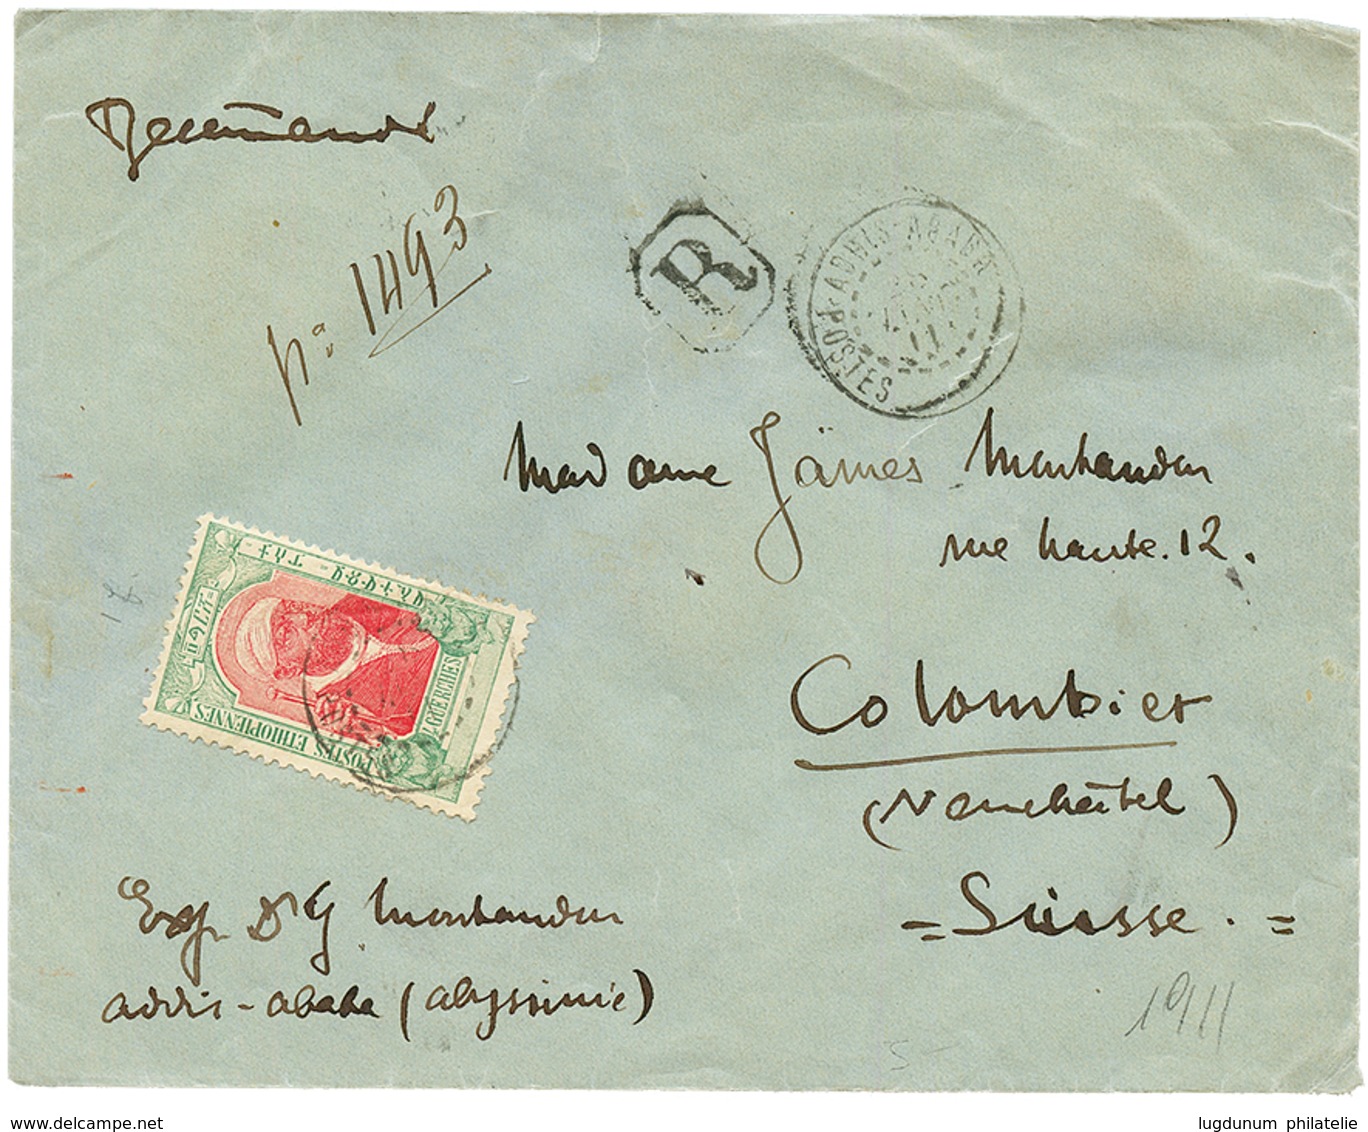 1911 4g Canc. ADDIS-ABABA POSTES (french Type) On REGISTERED Envelope To SWITZERLAND. Scarce. Vvf. - Etiopía